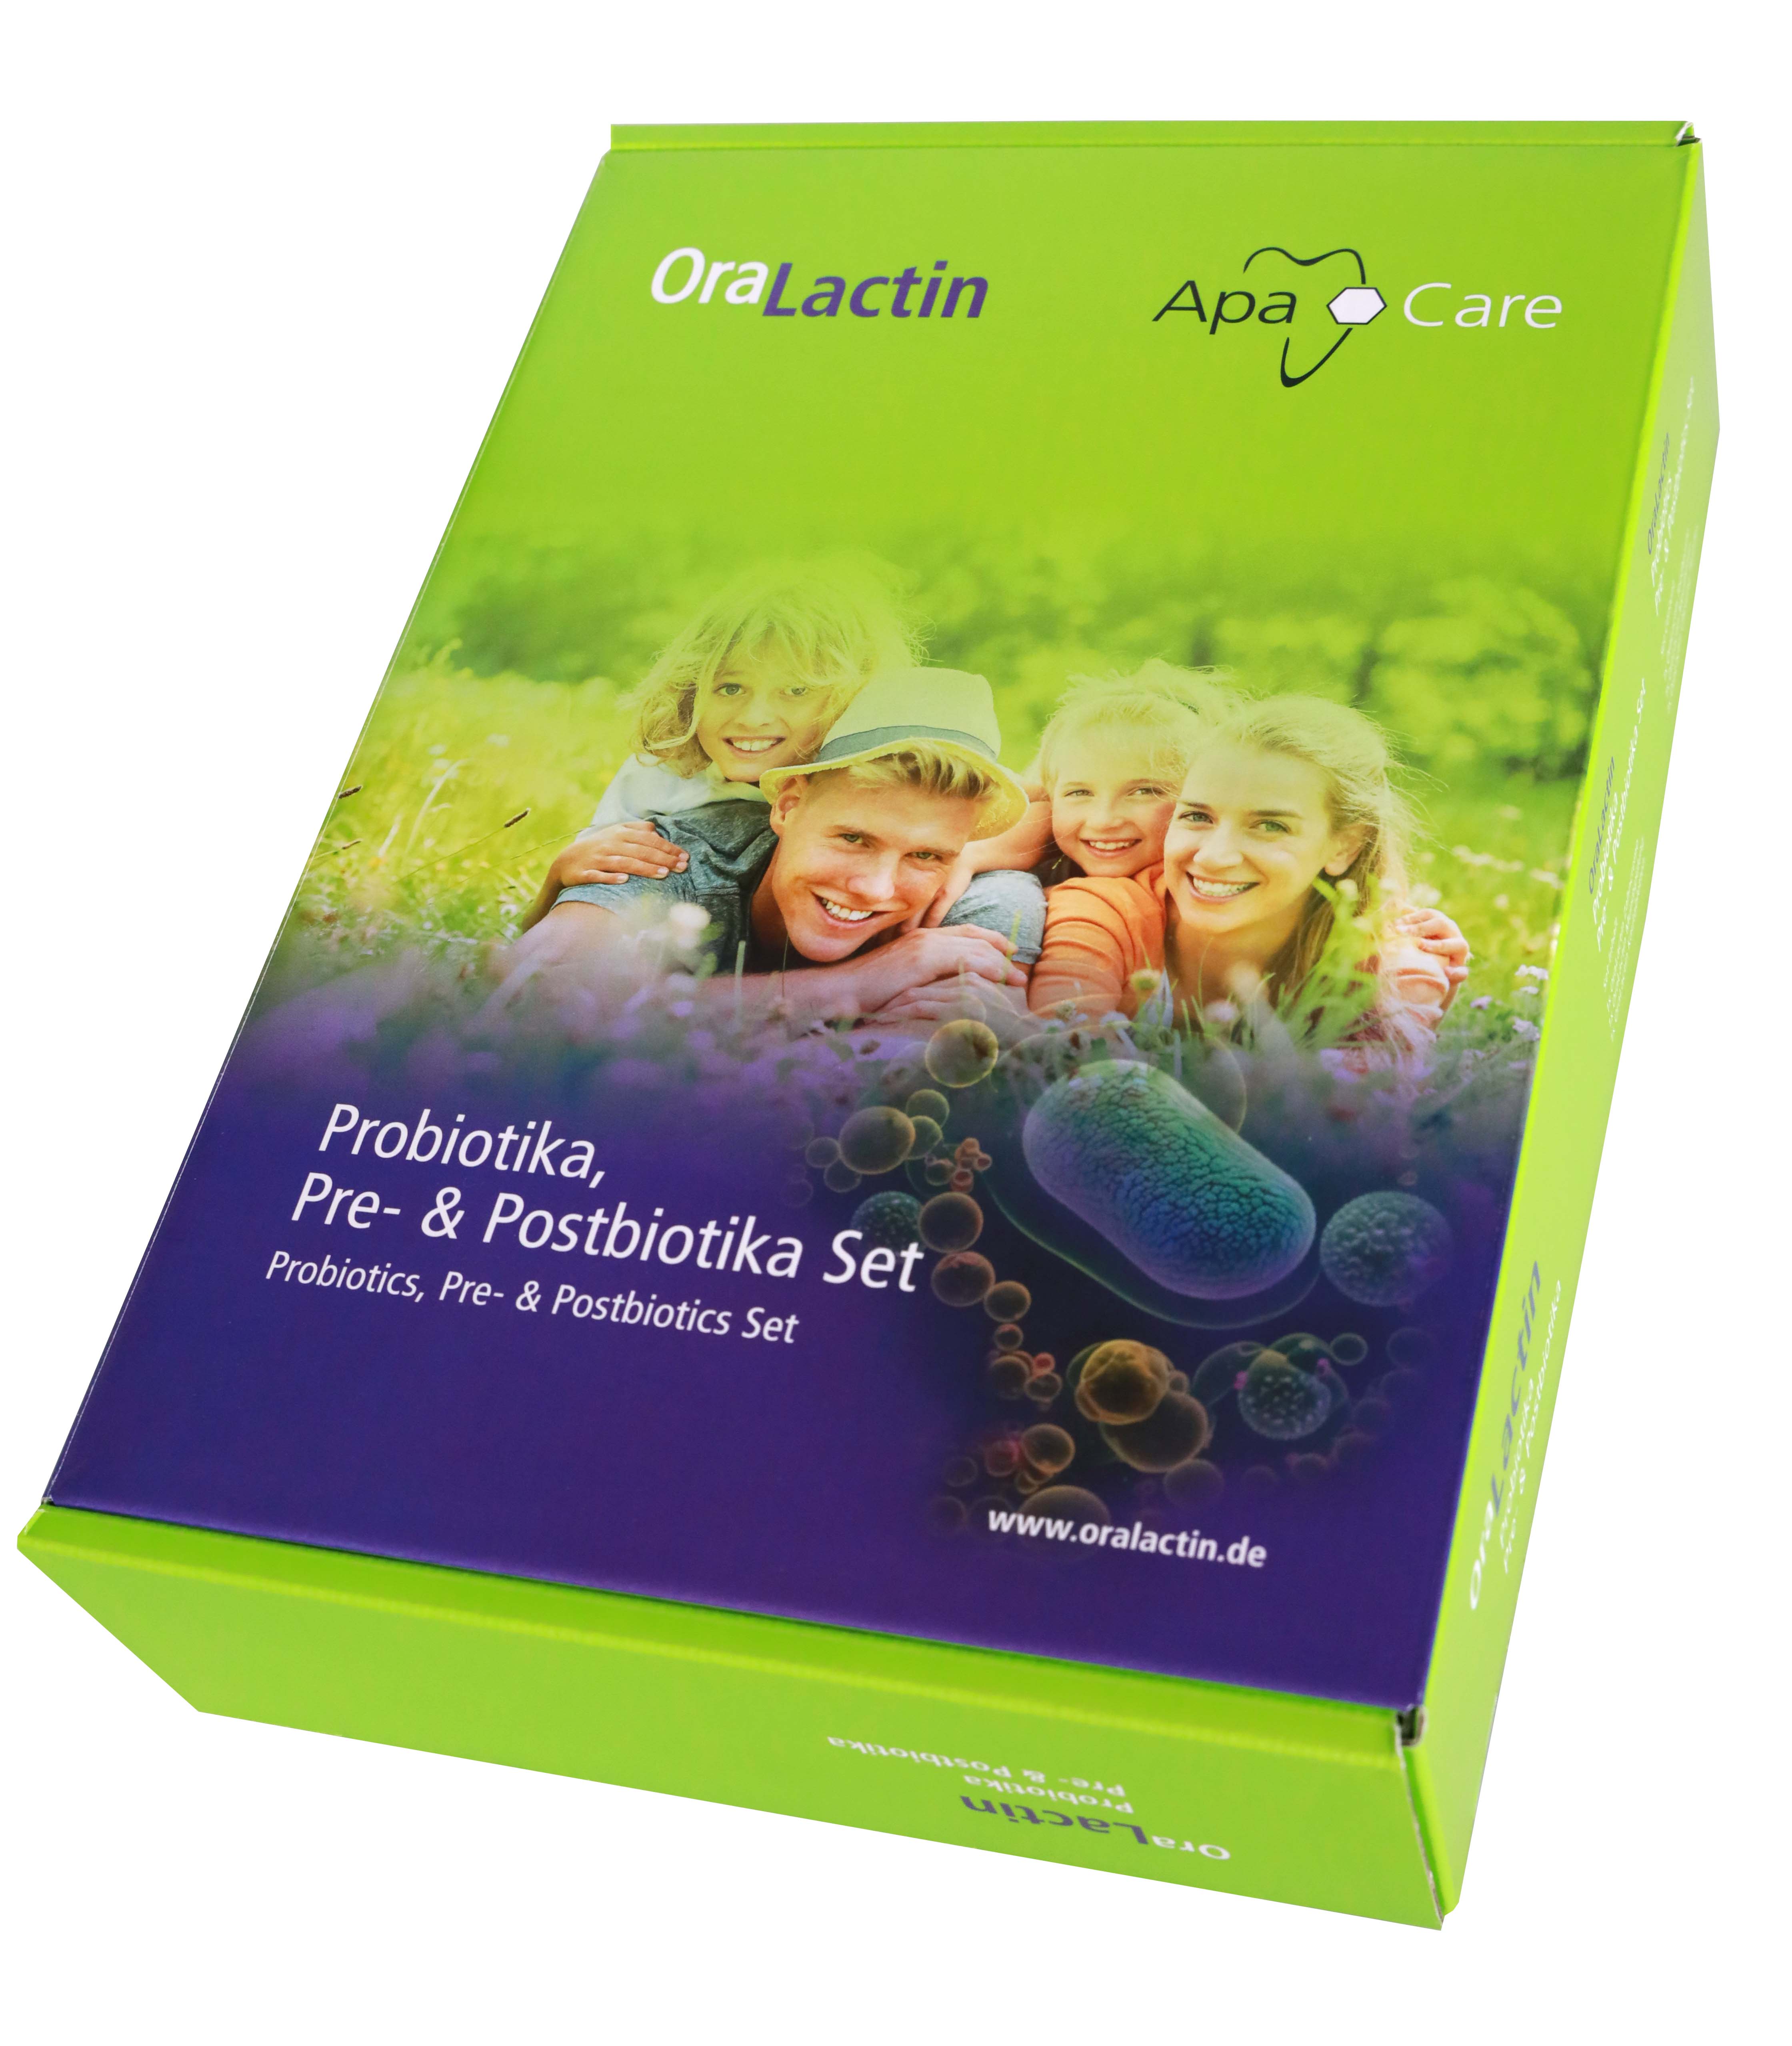 OraLactin Probiotika, Pre- und Postbiotika-Set